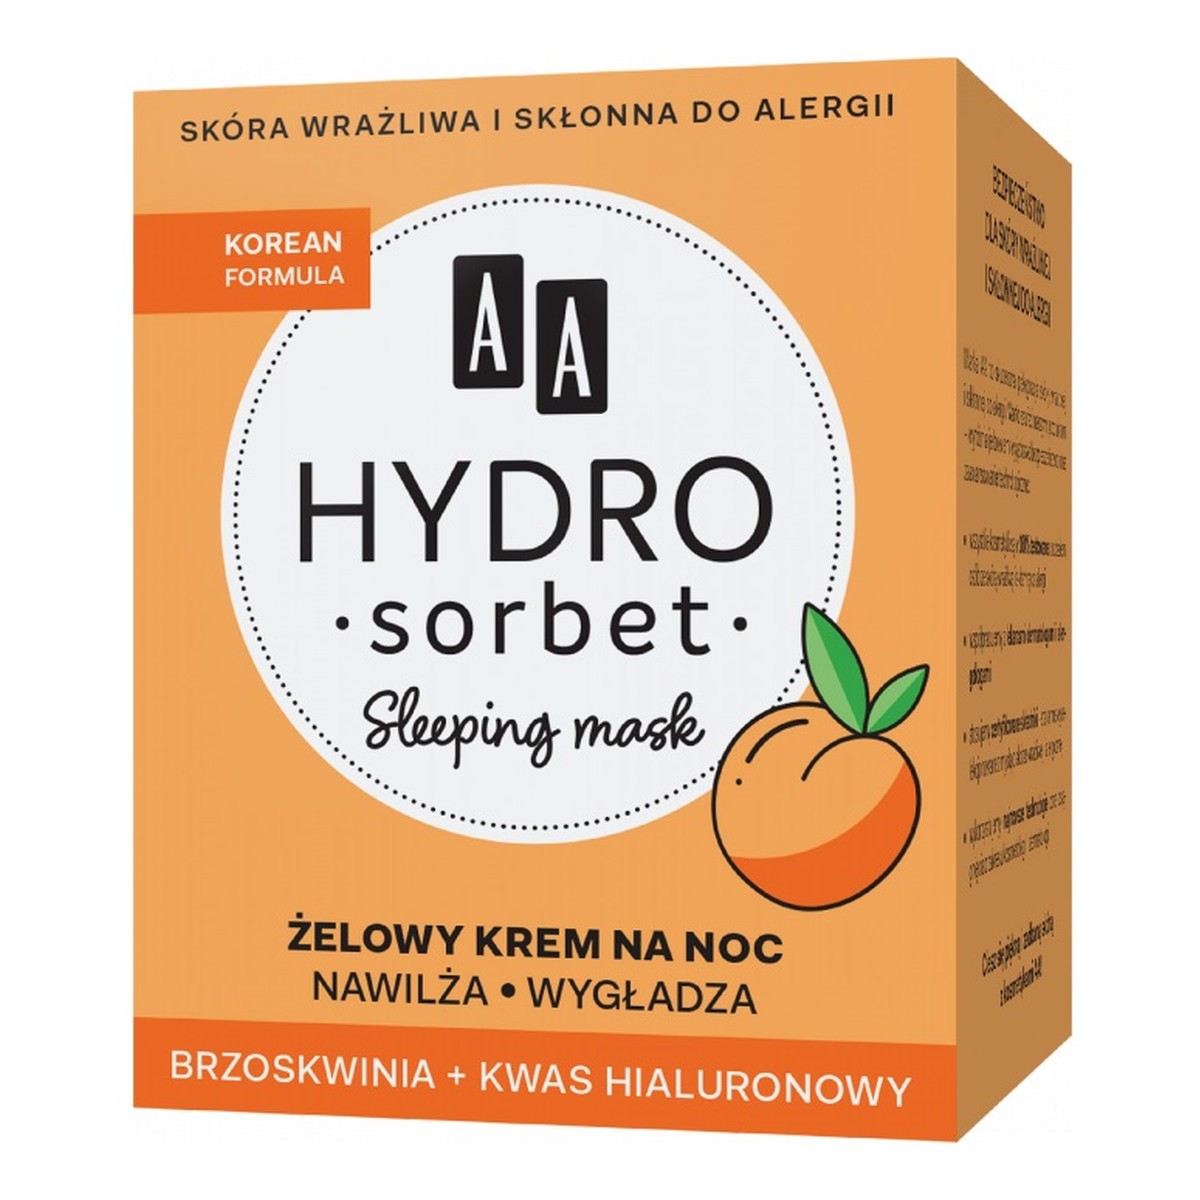 AA Hydro Sorbet Korean Formula Sleeping Mask żelowy krem na noc 50ml